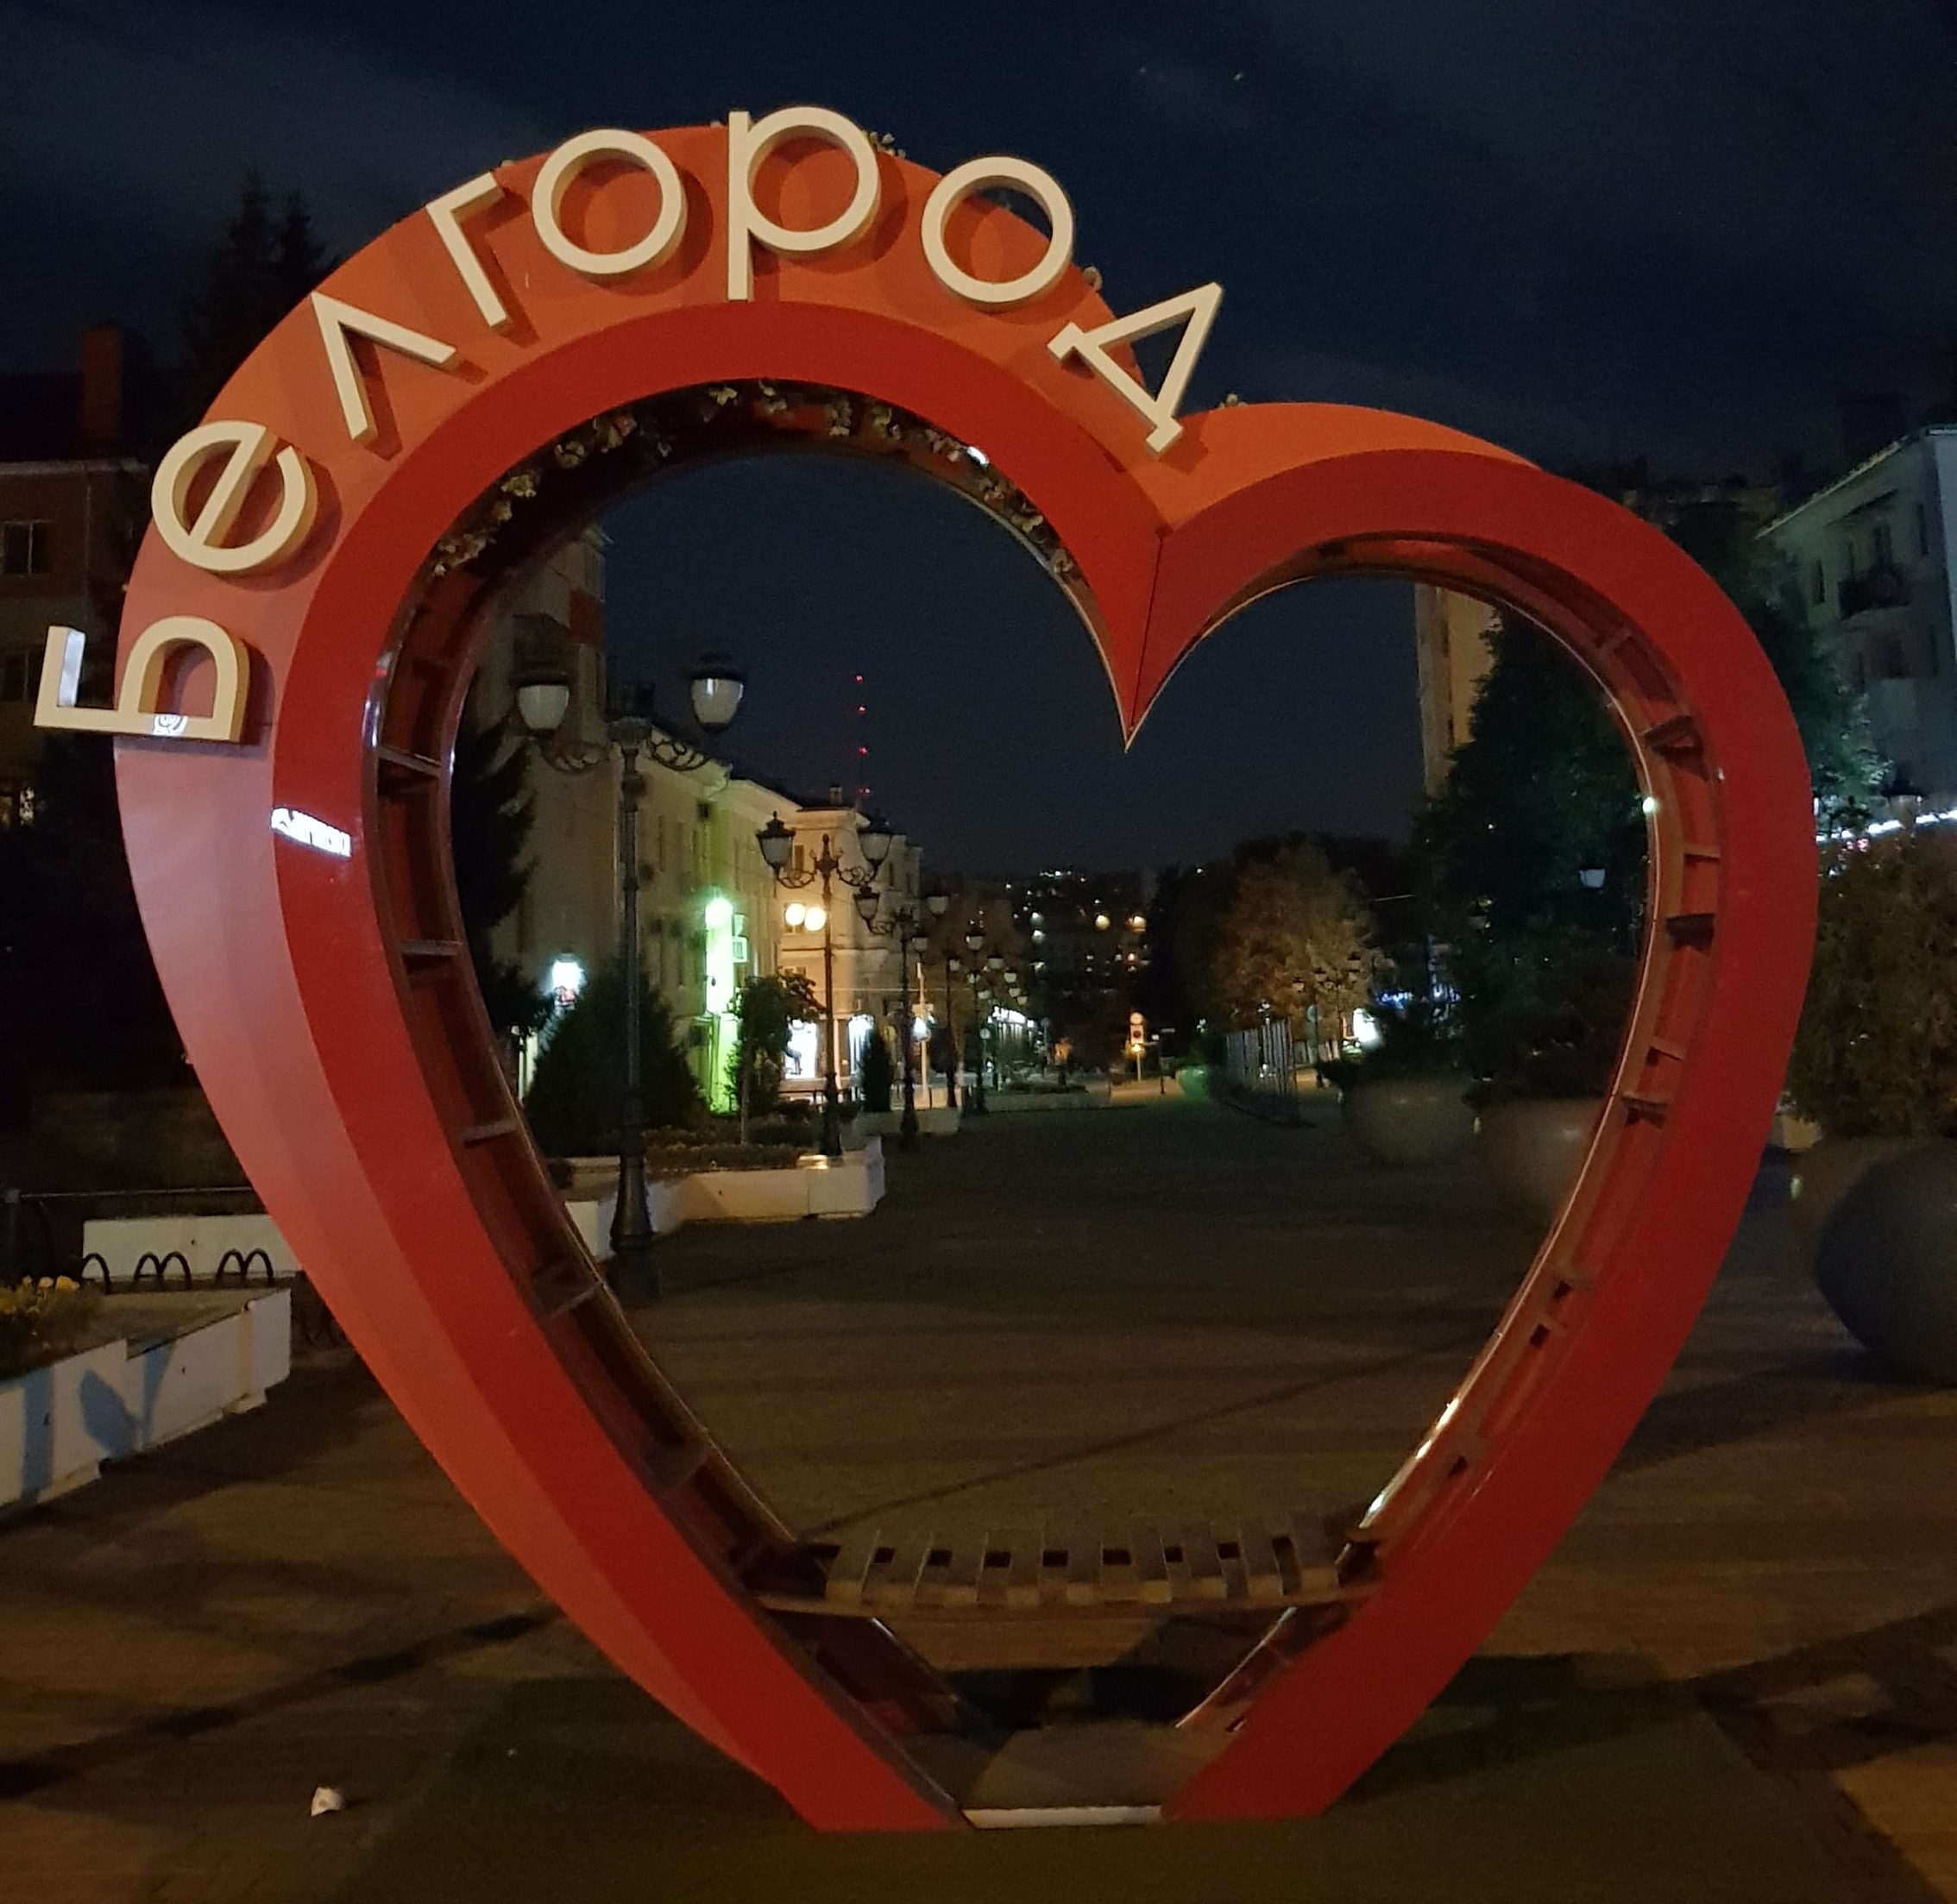 Belgorod. BIF 2019 and the speech about image